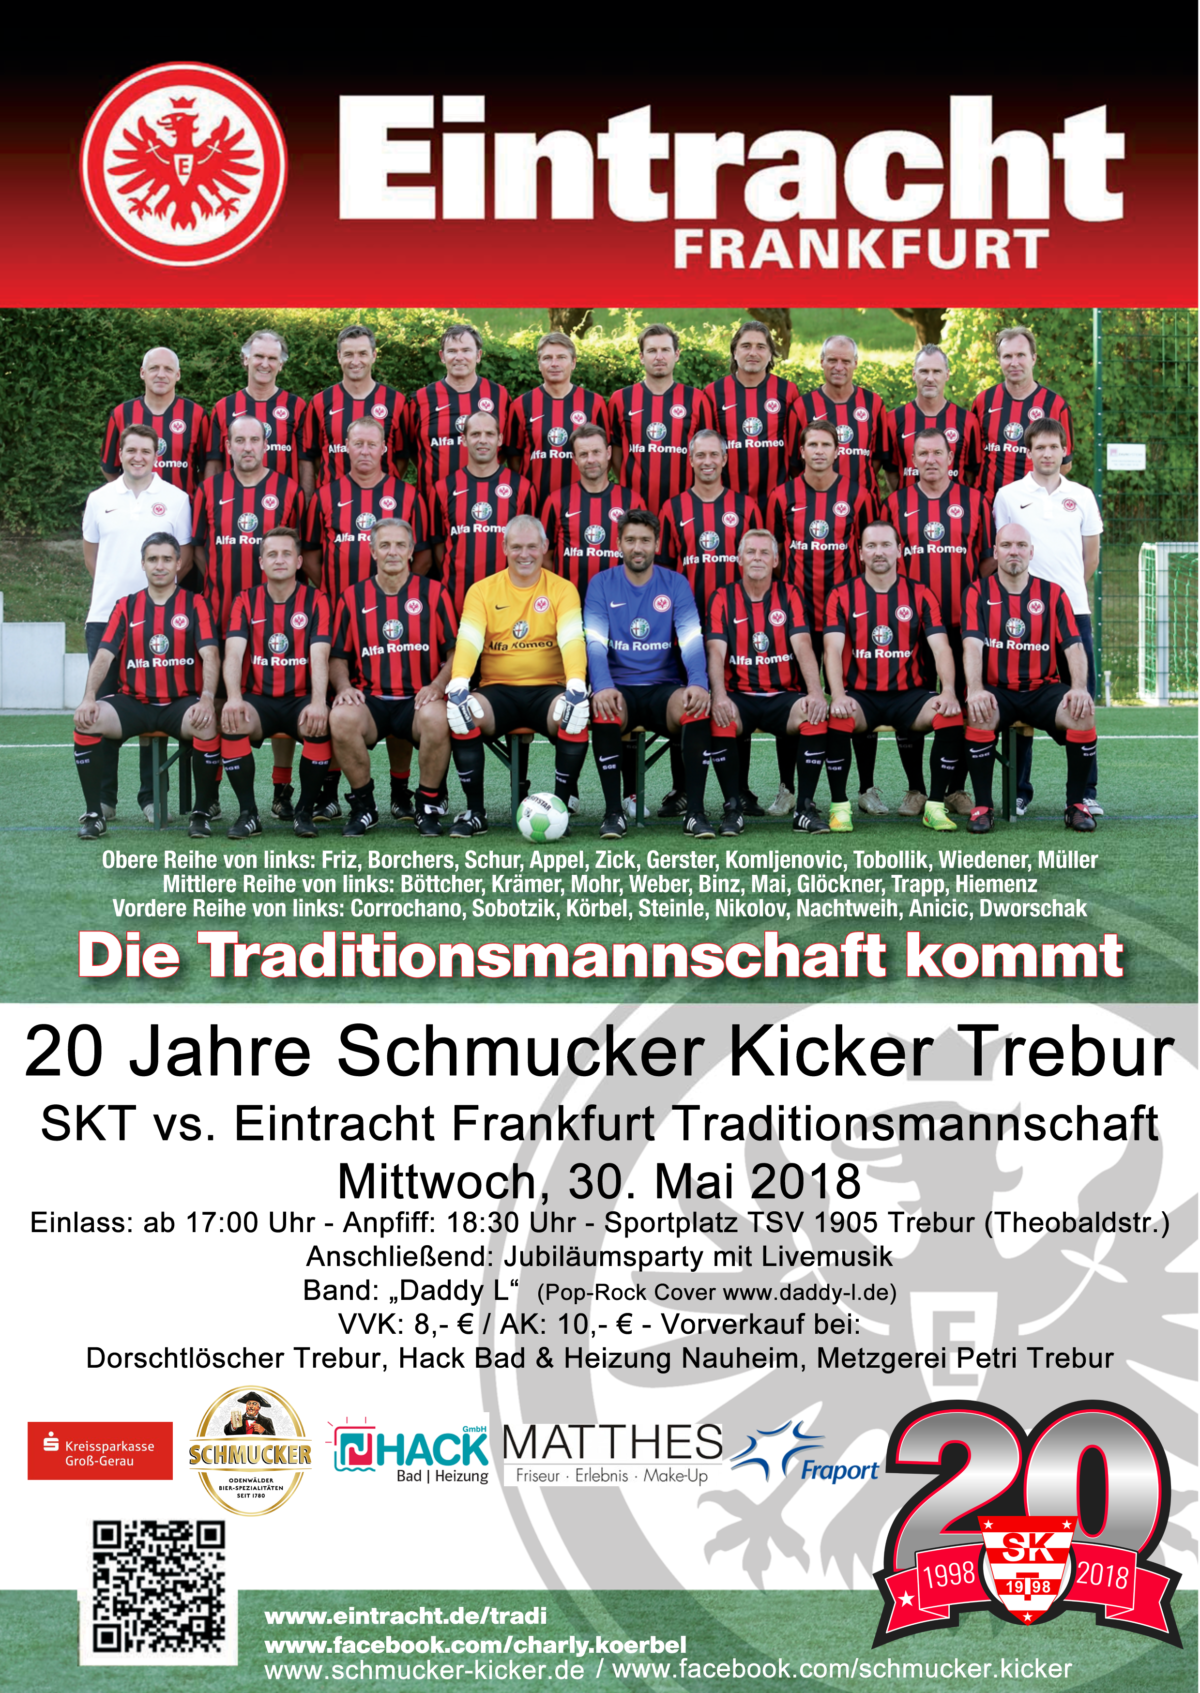 Eintracht Frankfurt Traditionsmannschaft gegen Schmucker Kicker Trebur 30. Mai 2018